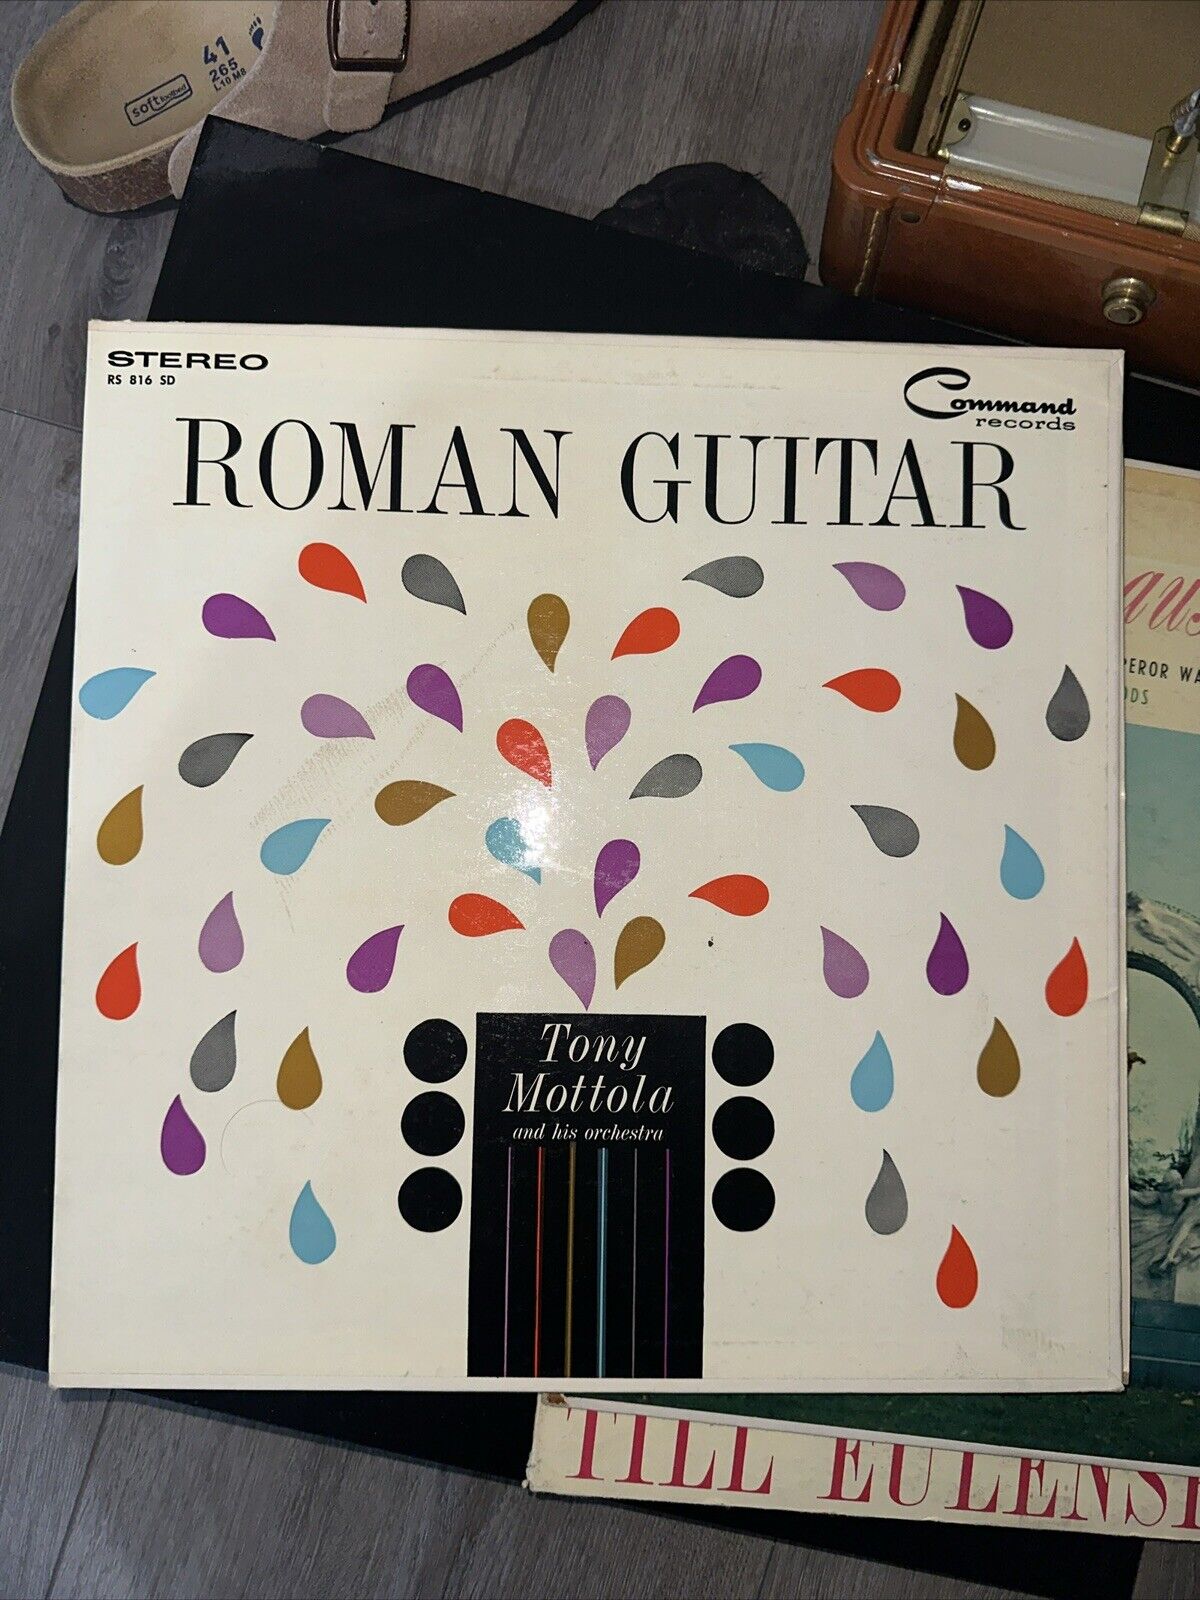 TONY MOTTOLA – ROMAN GUITAR – COMMAND RS-816 - 12 INCH 33 RPM STEREO LP ALBUM